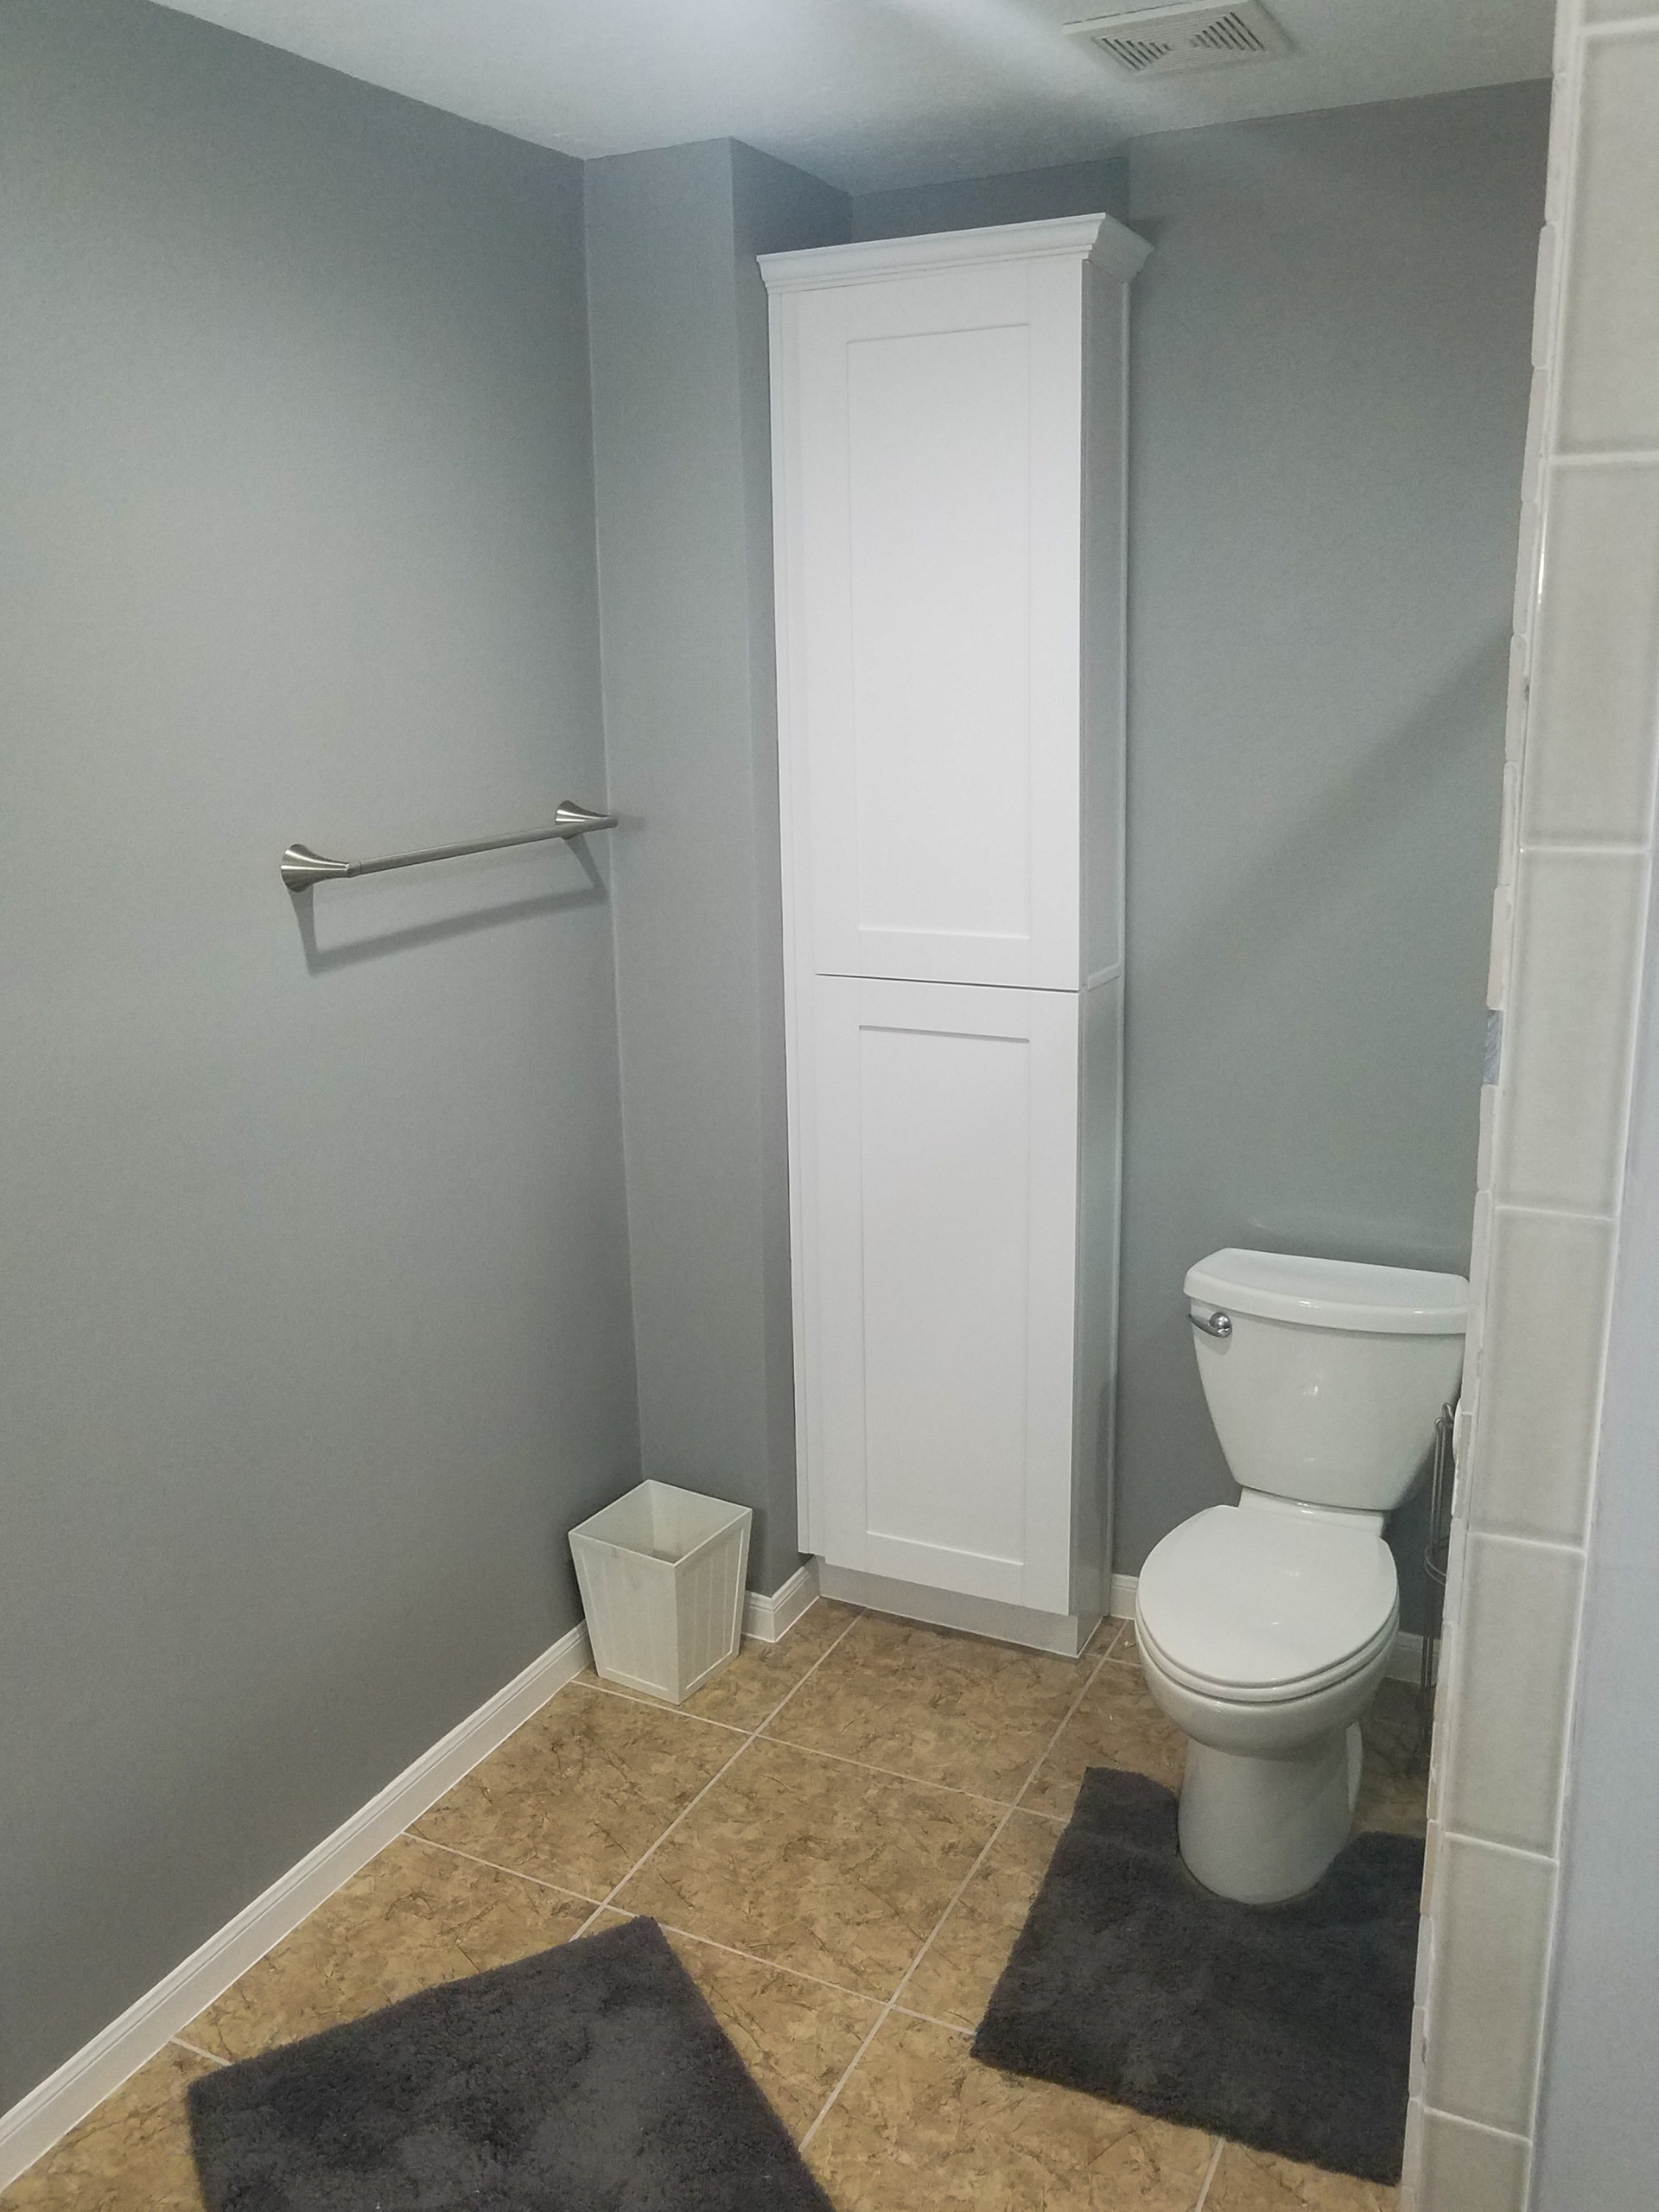 Master bathroom Remodel